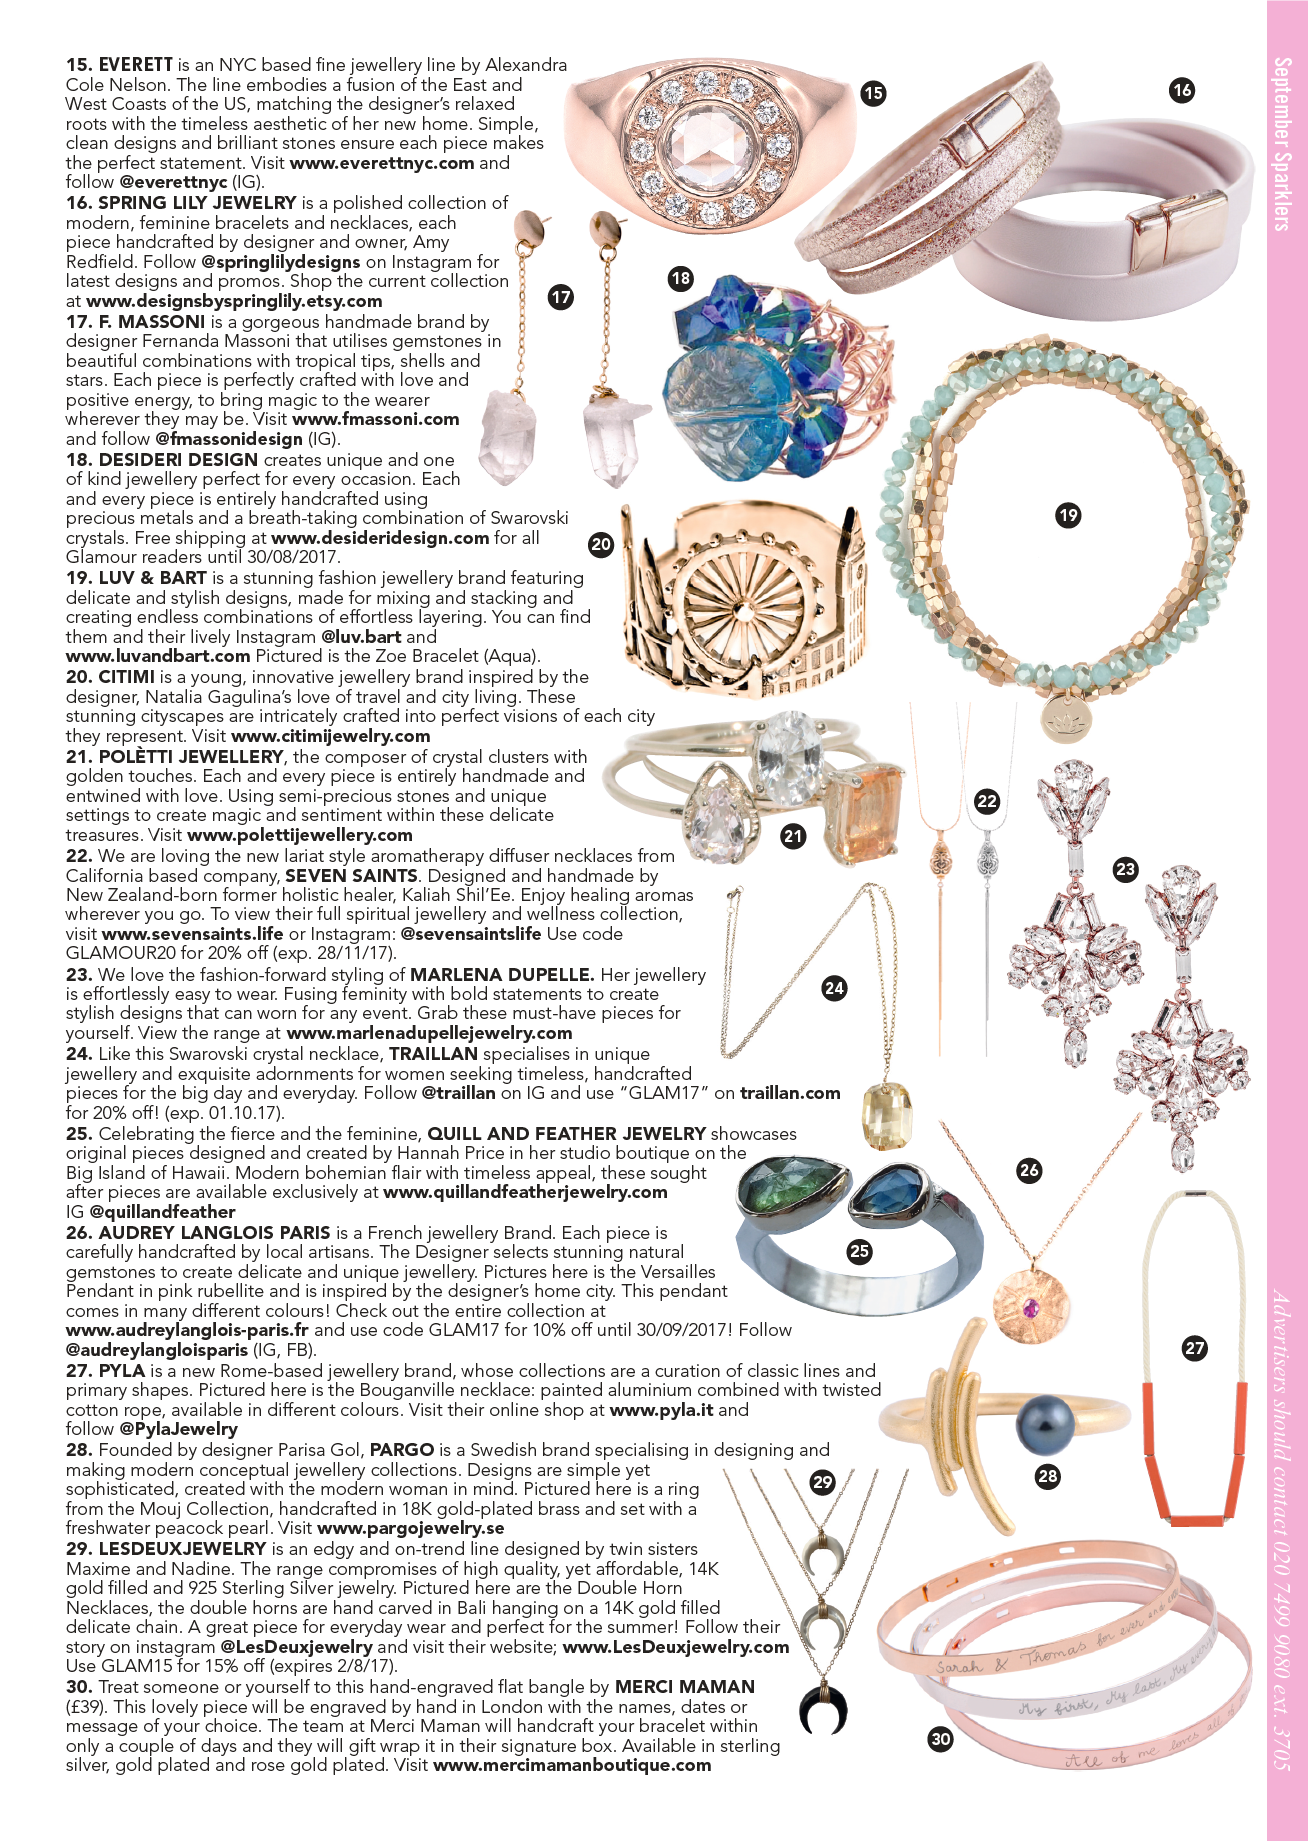 everett custom jewelry glamour uk magazine article press 